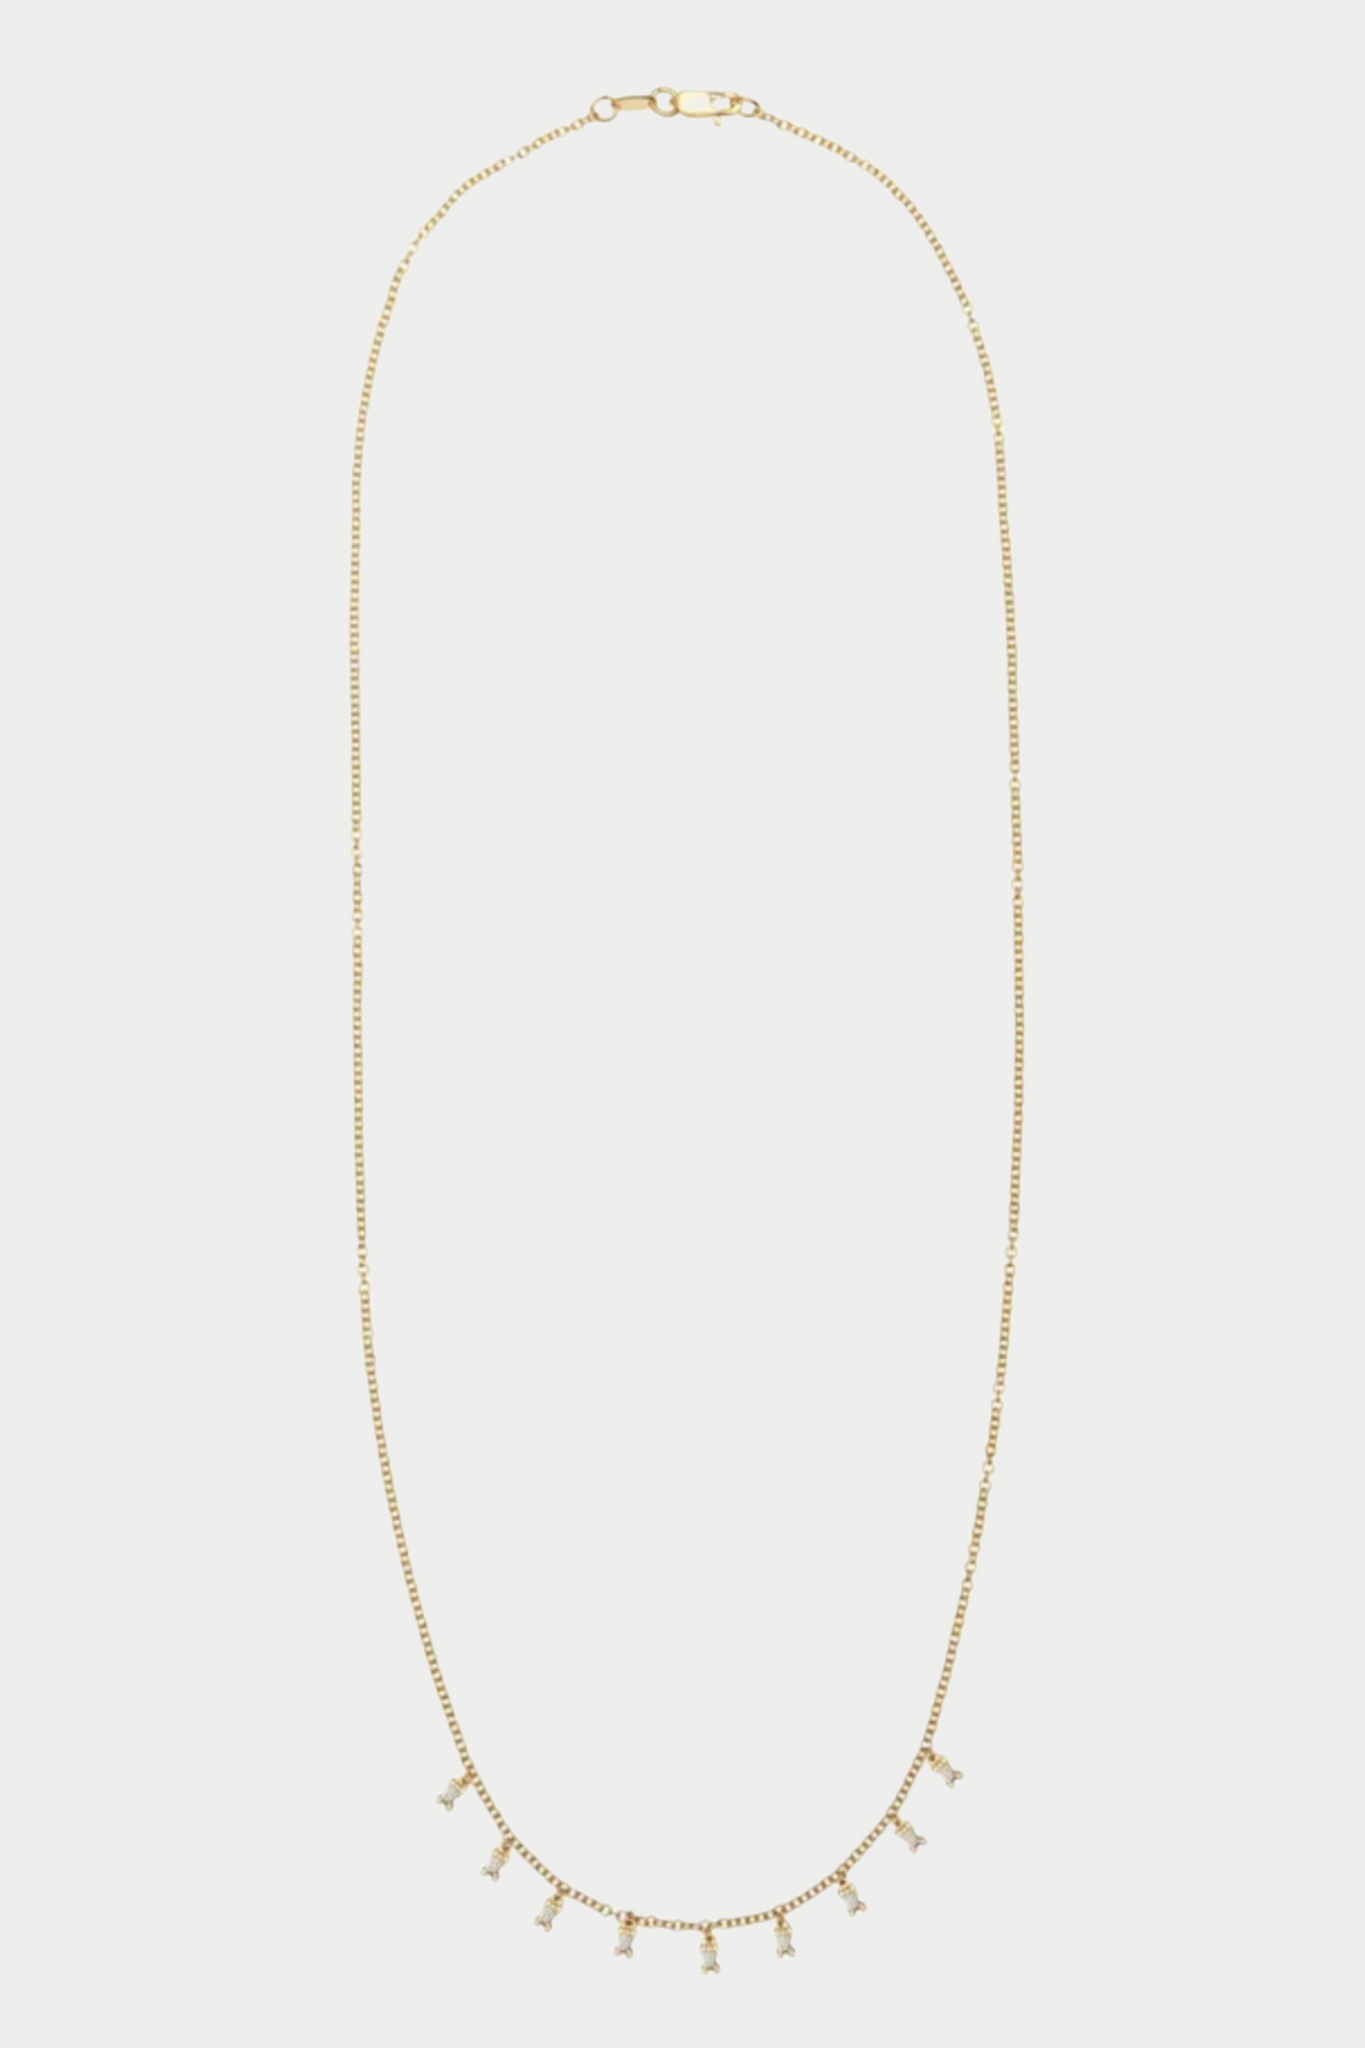 ILEANA MAKRI - Baguette Drop Necklace, Yellow Gold